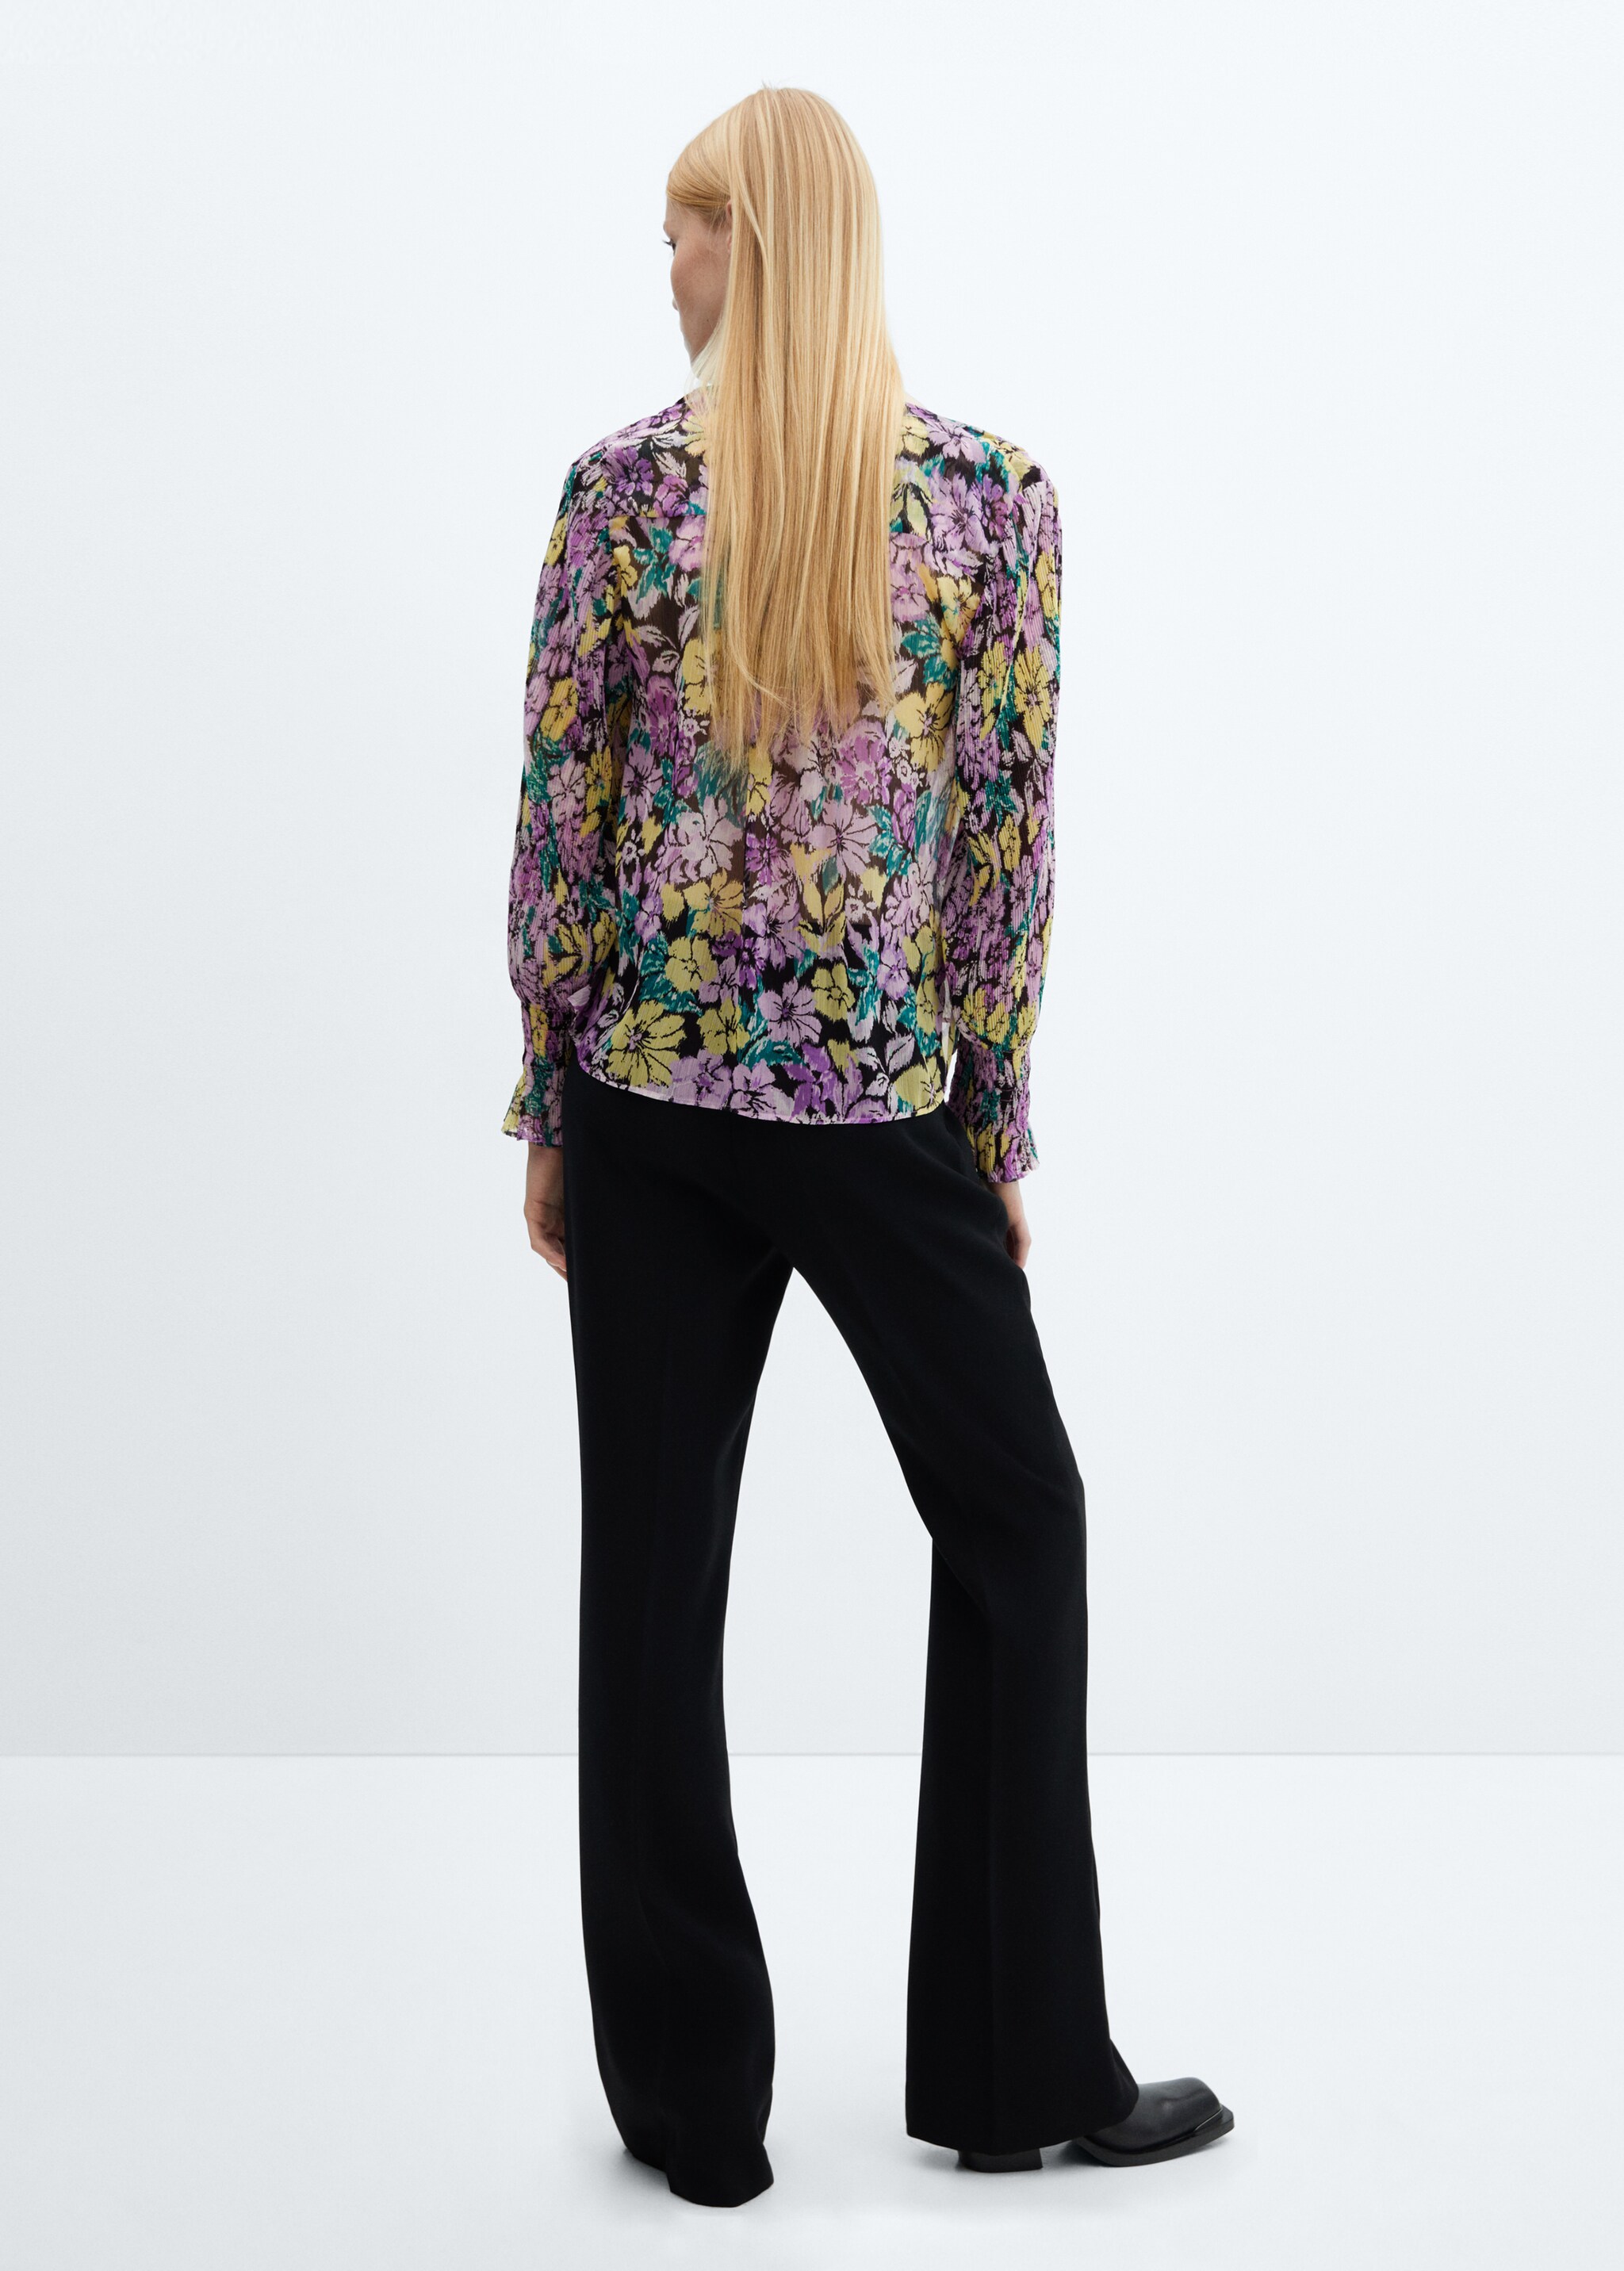 Florale Bluse mit Textur - Rückseite des Artikels